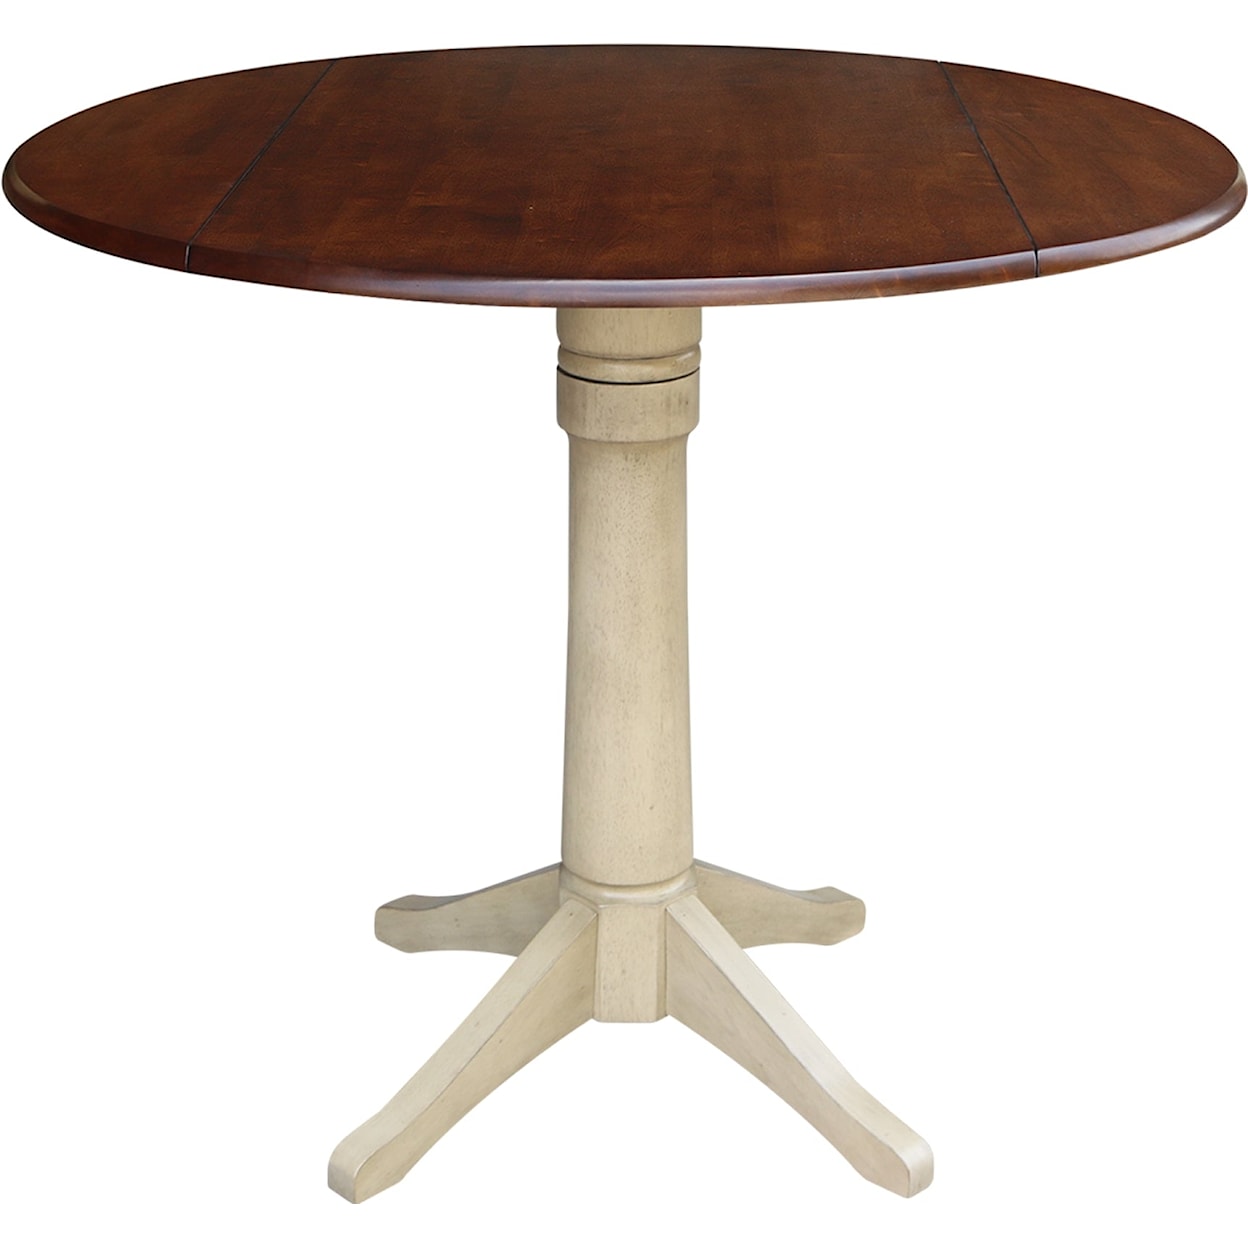 John Thomas Dining Essentials Dropleaf Pedestal Table in Espresso/Almond